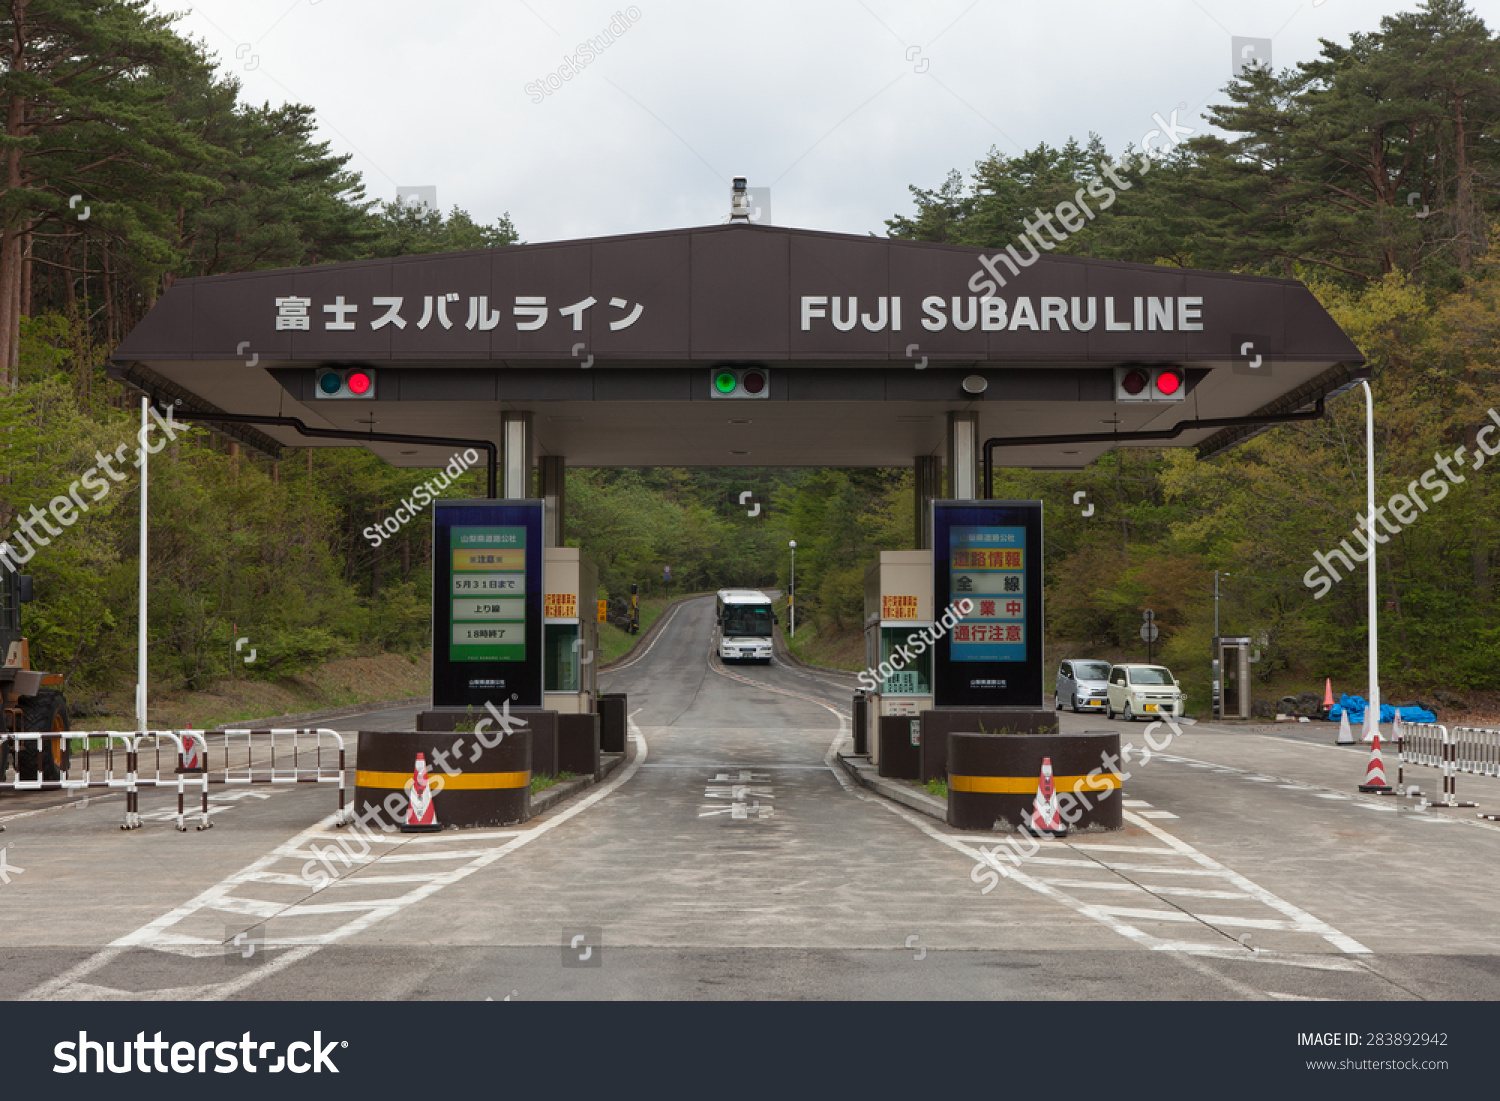 Fuji, Japan May 8, 2015 Fuji Subaru Line 5th Station